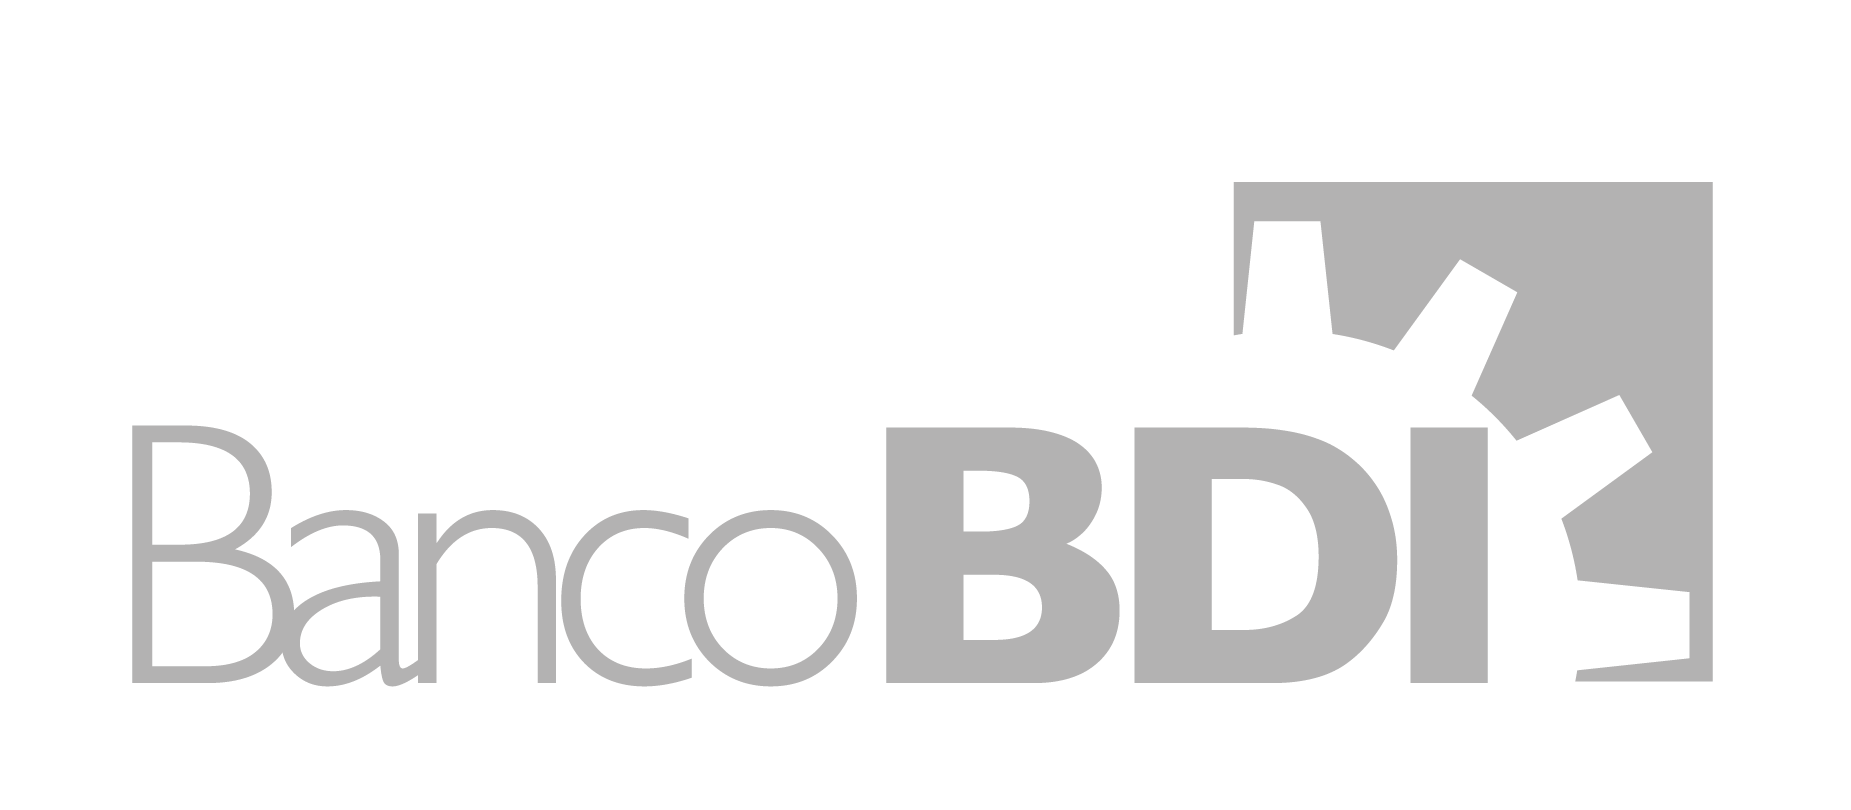 Socios - image Banco-BDI on https://gcs-international.com